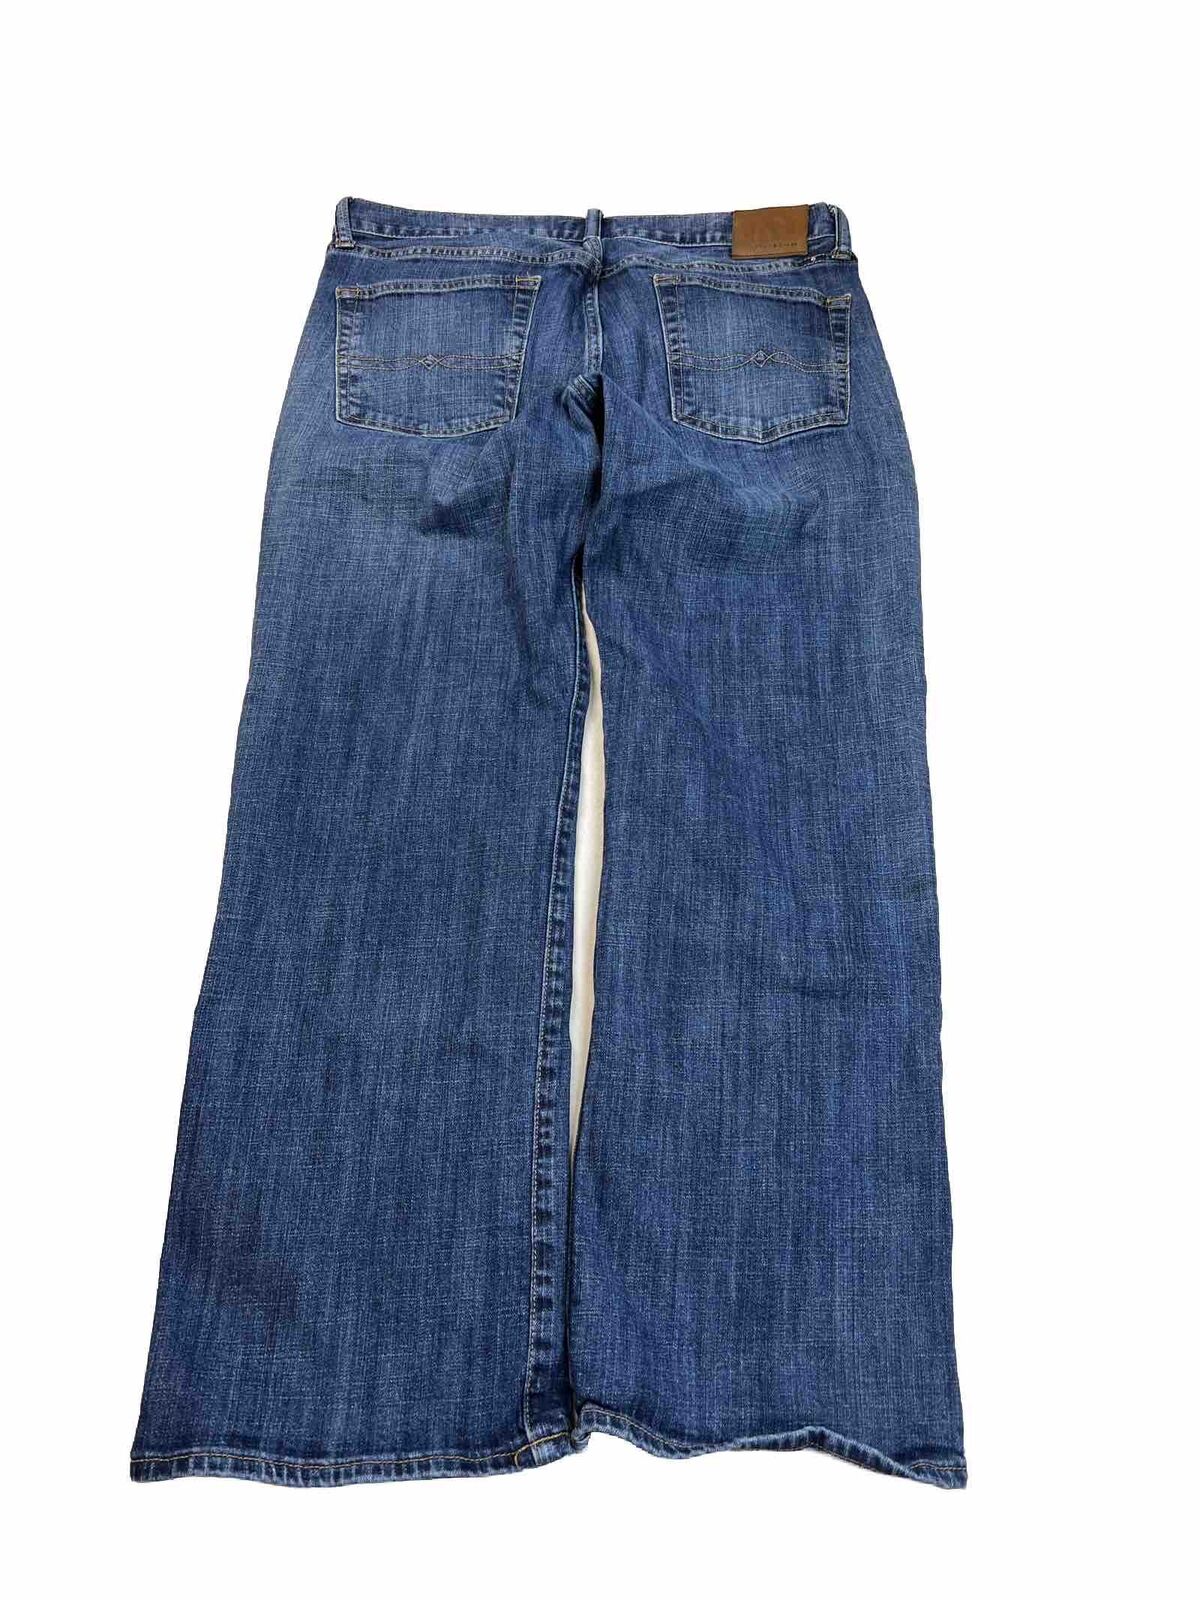 Lucky Brand Men's Medium Wash 361 Vintage Straight Jeans - 34x30